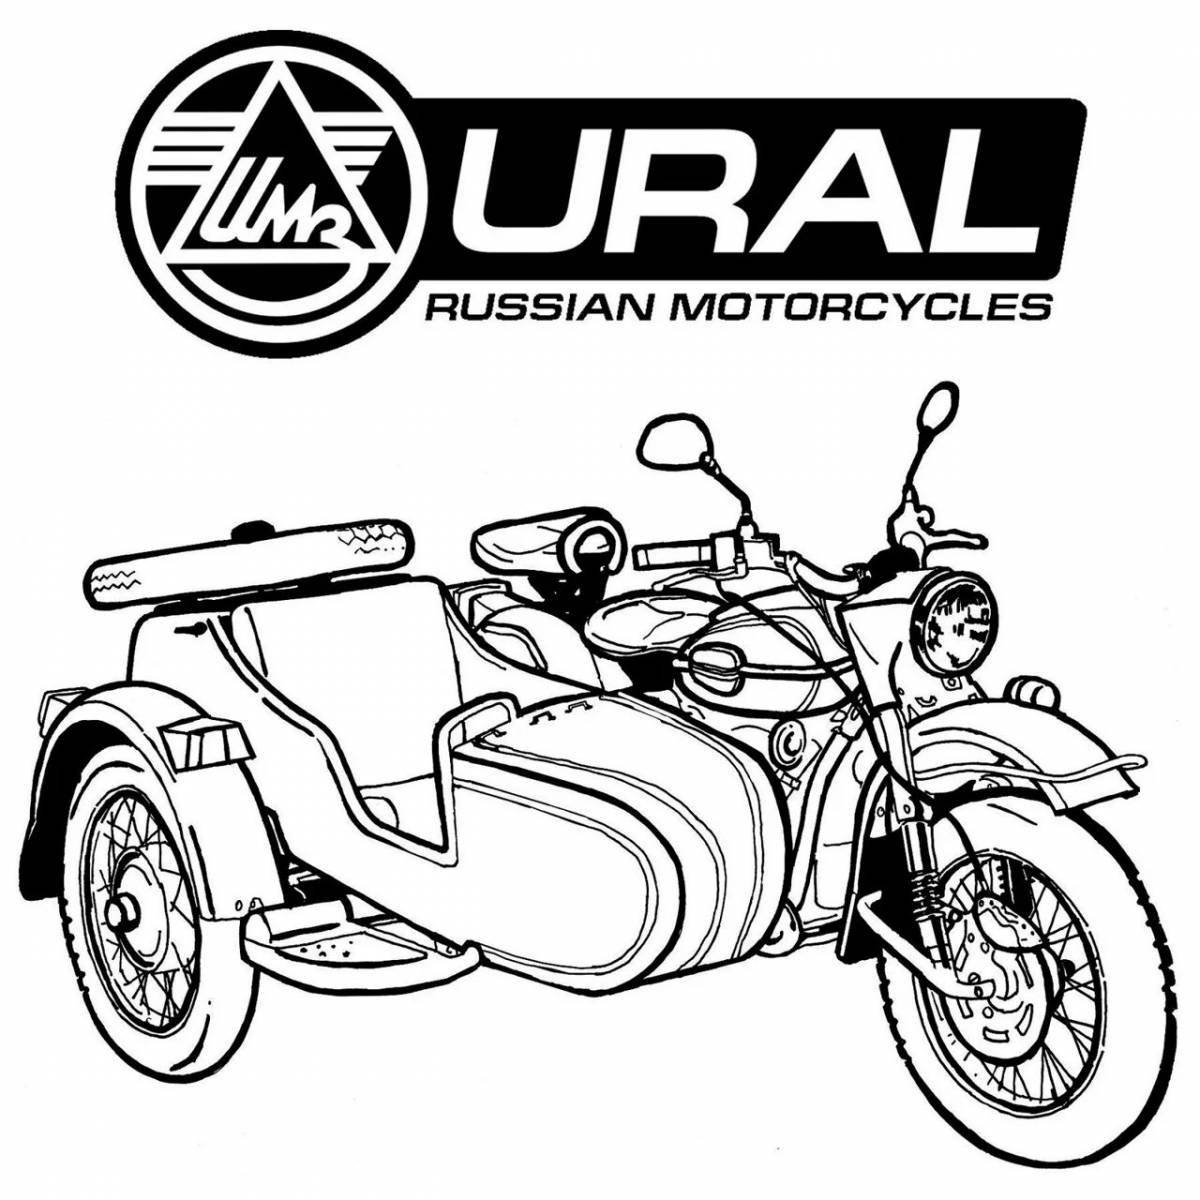 Shiny white USSR motorcycles